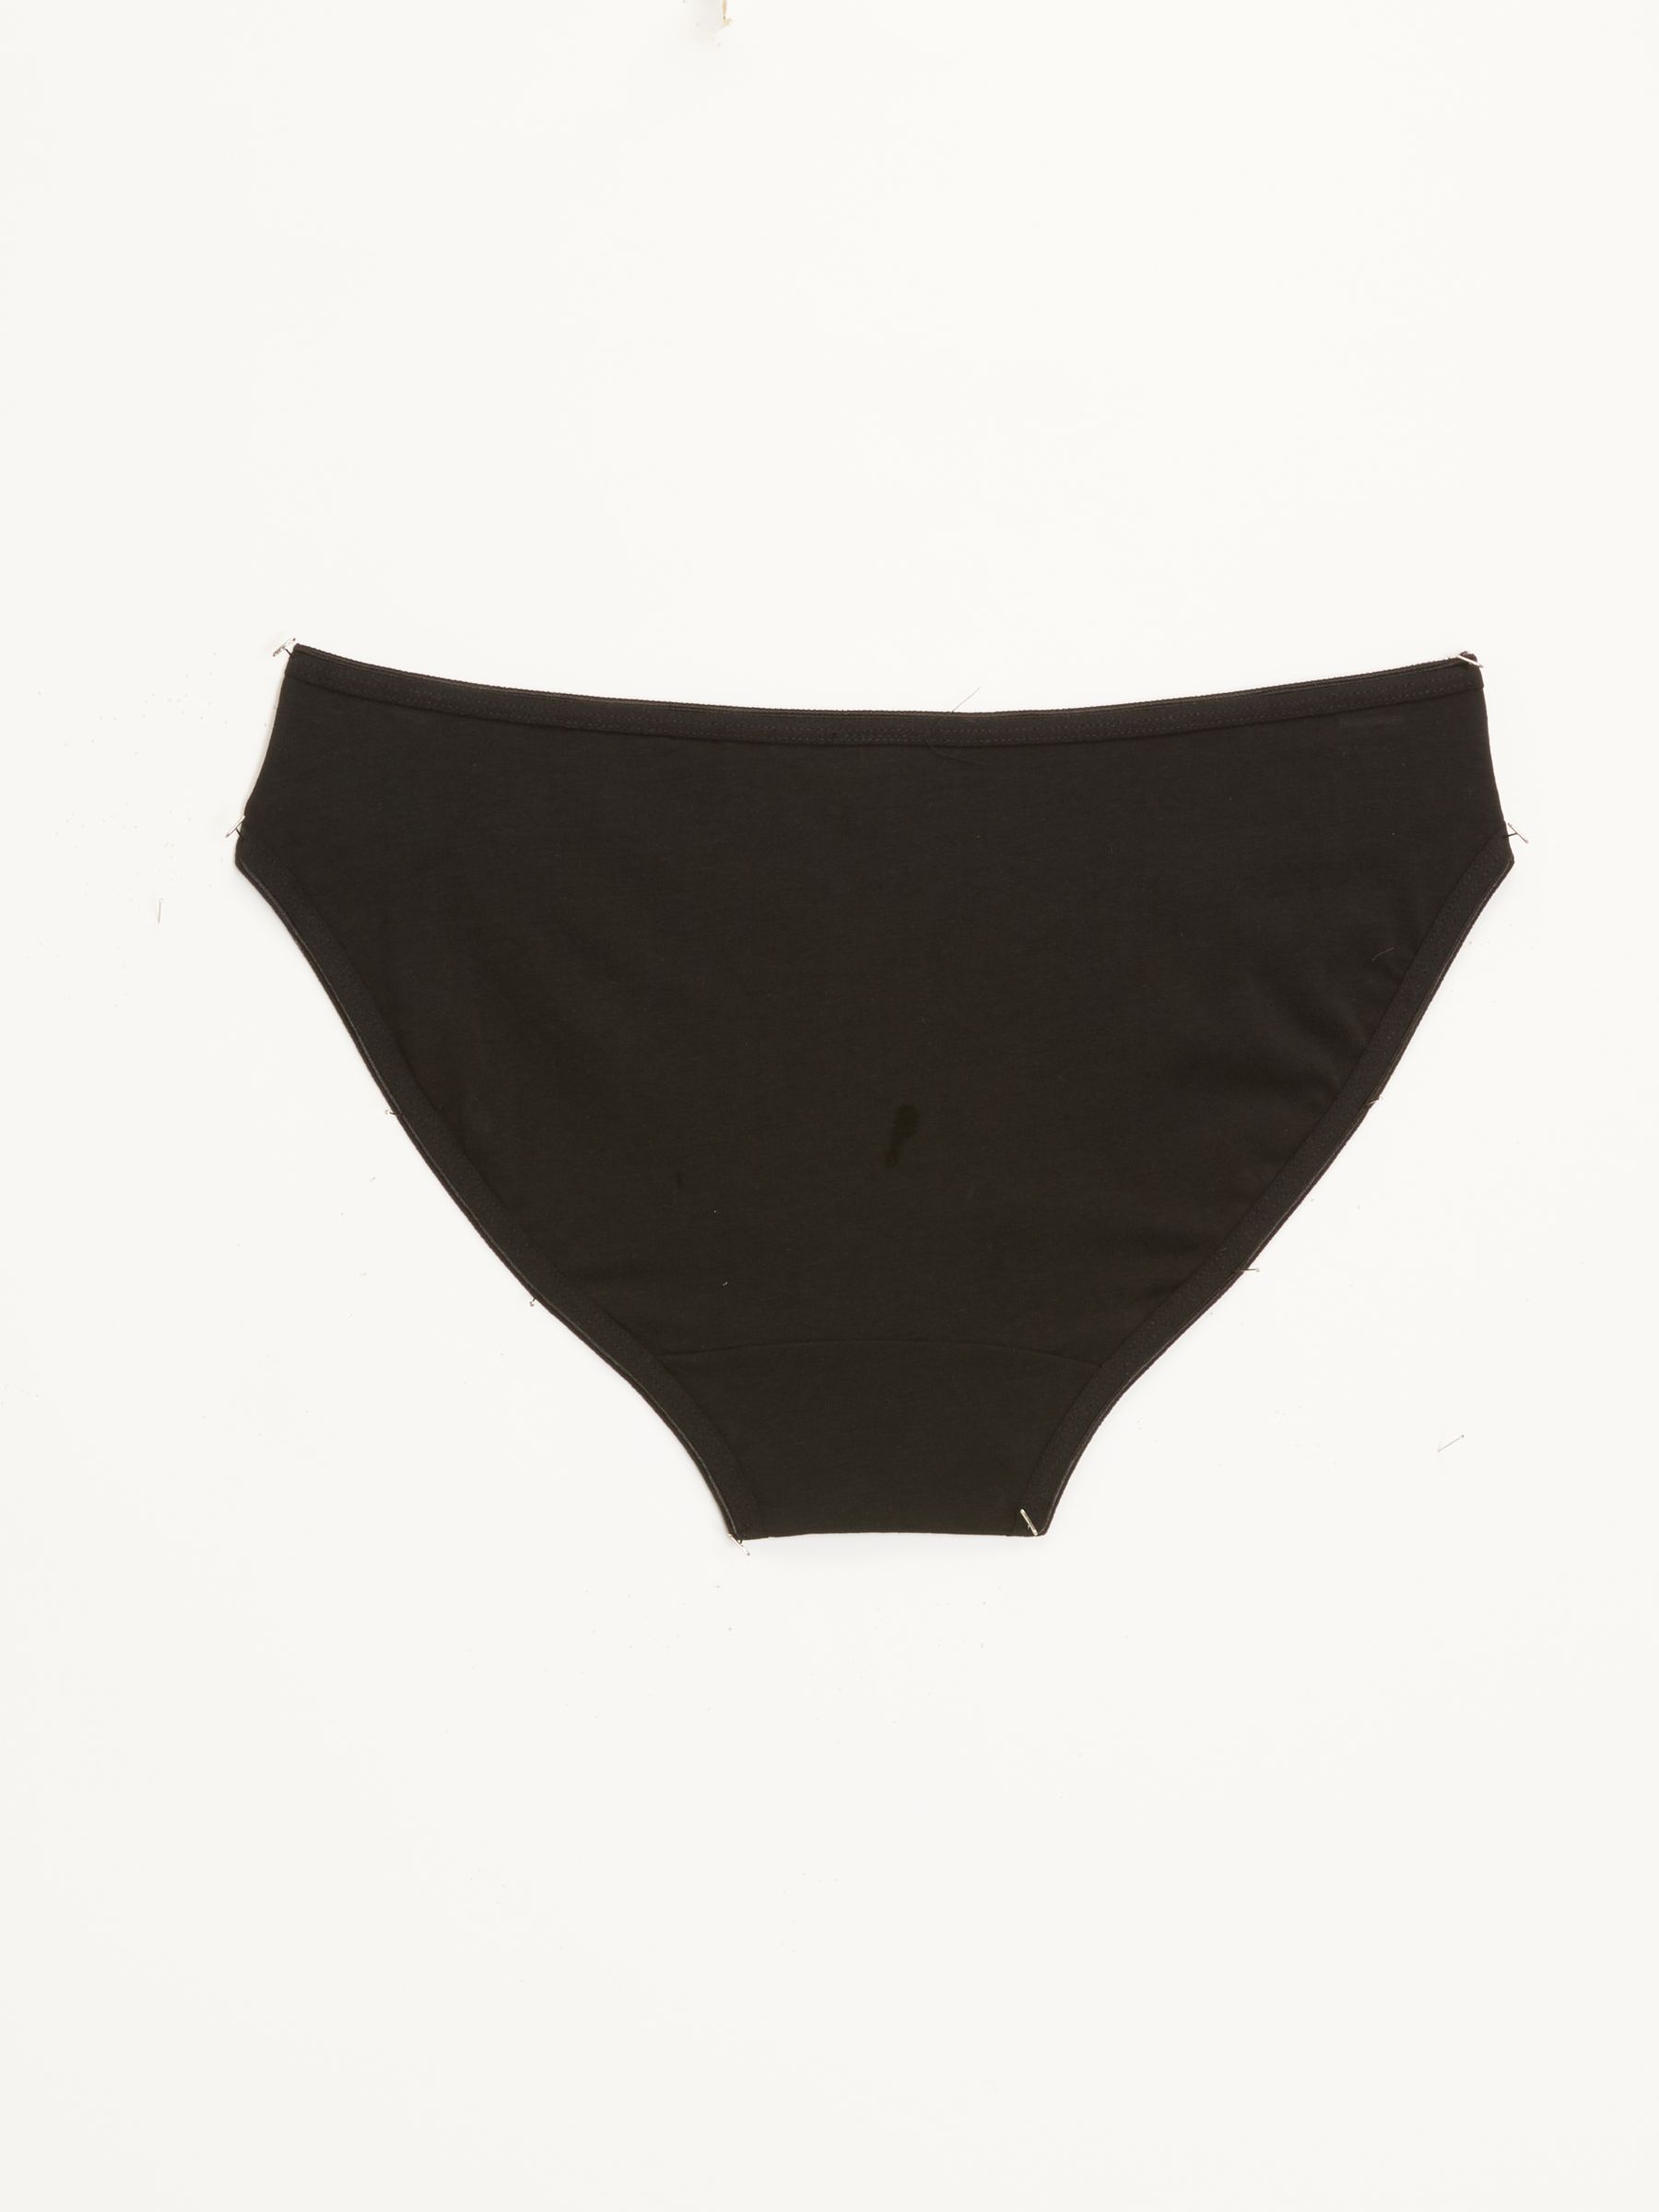 John Lewis ANYDAY Microfibre Bikini Knickers, Pack of 5, Black, 8